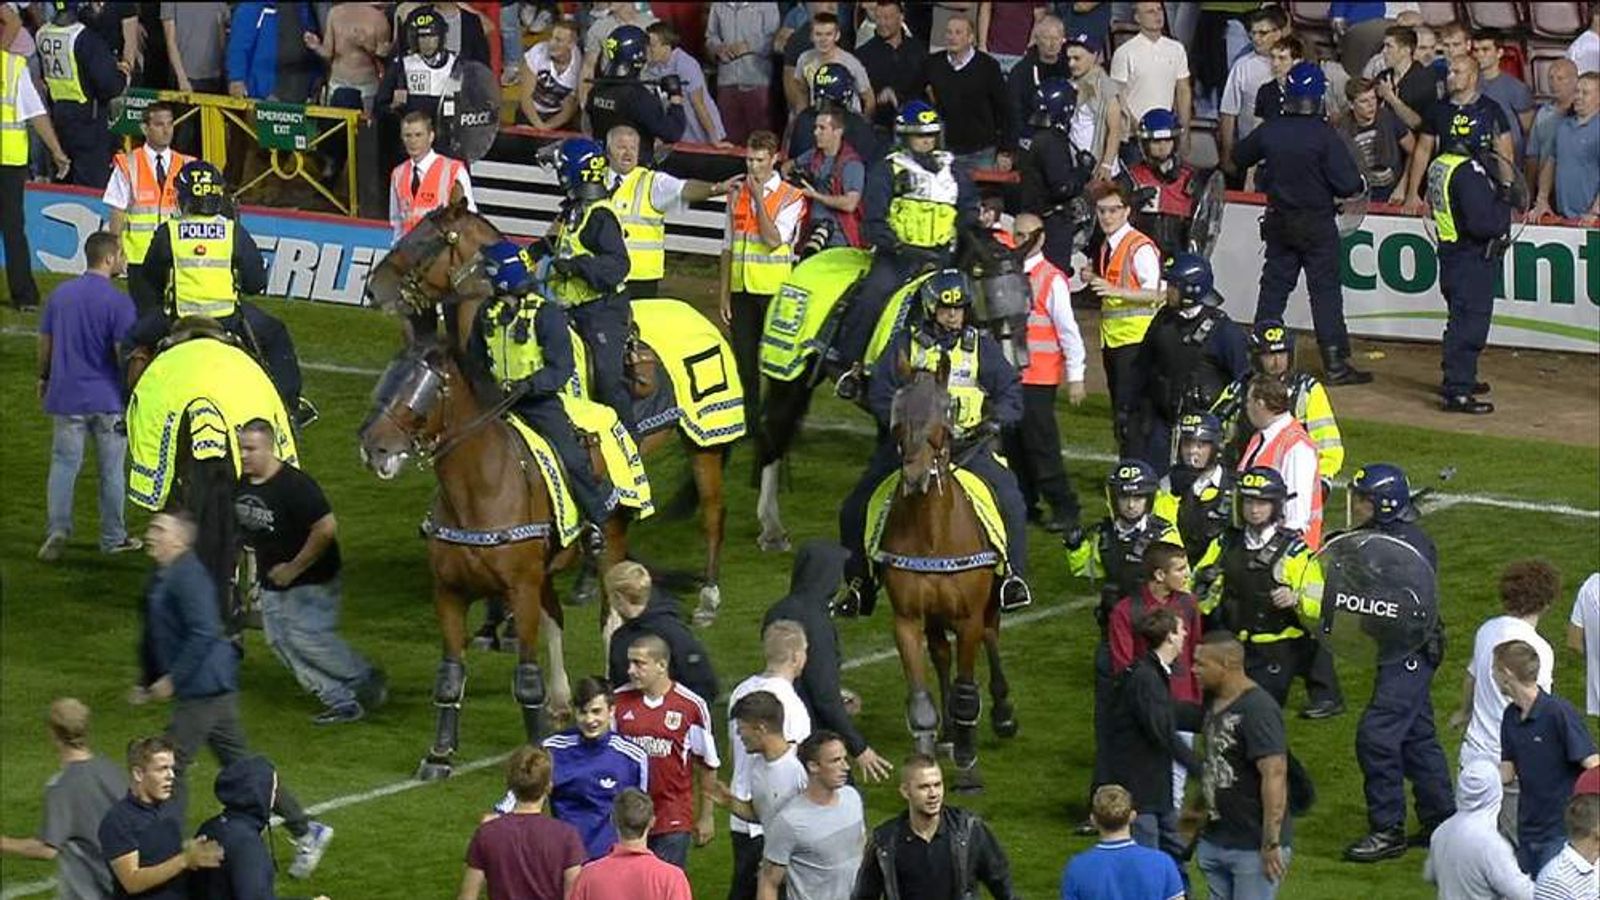 Bristol Football Violence At Derby Match UK News Sky News